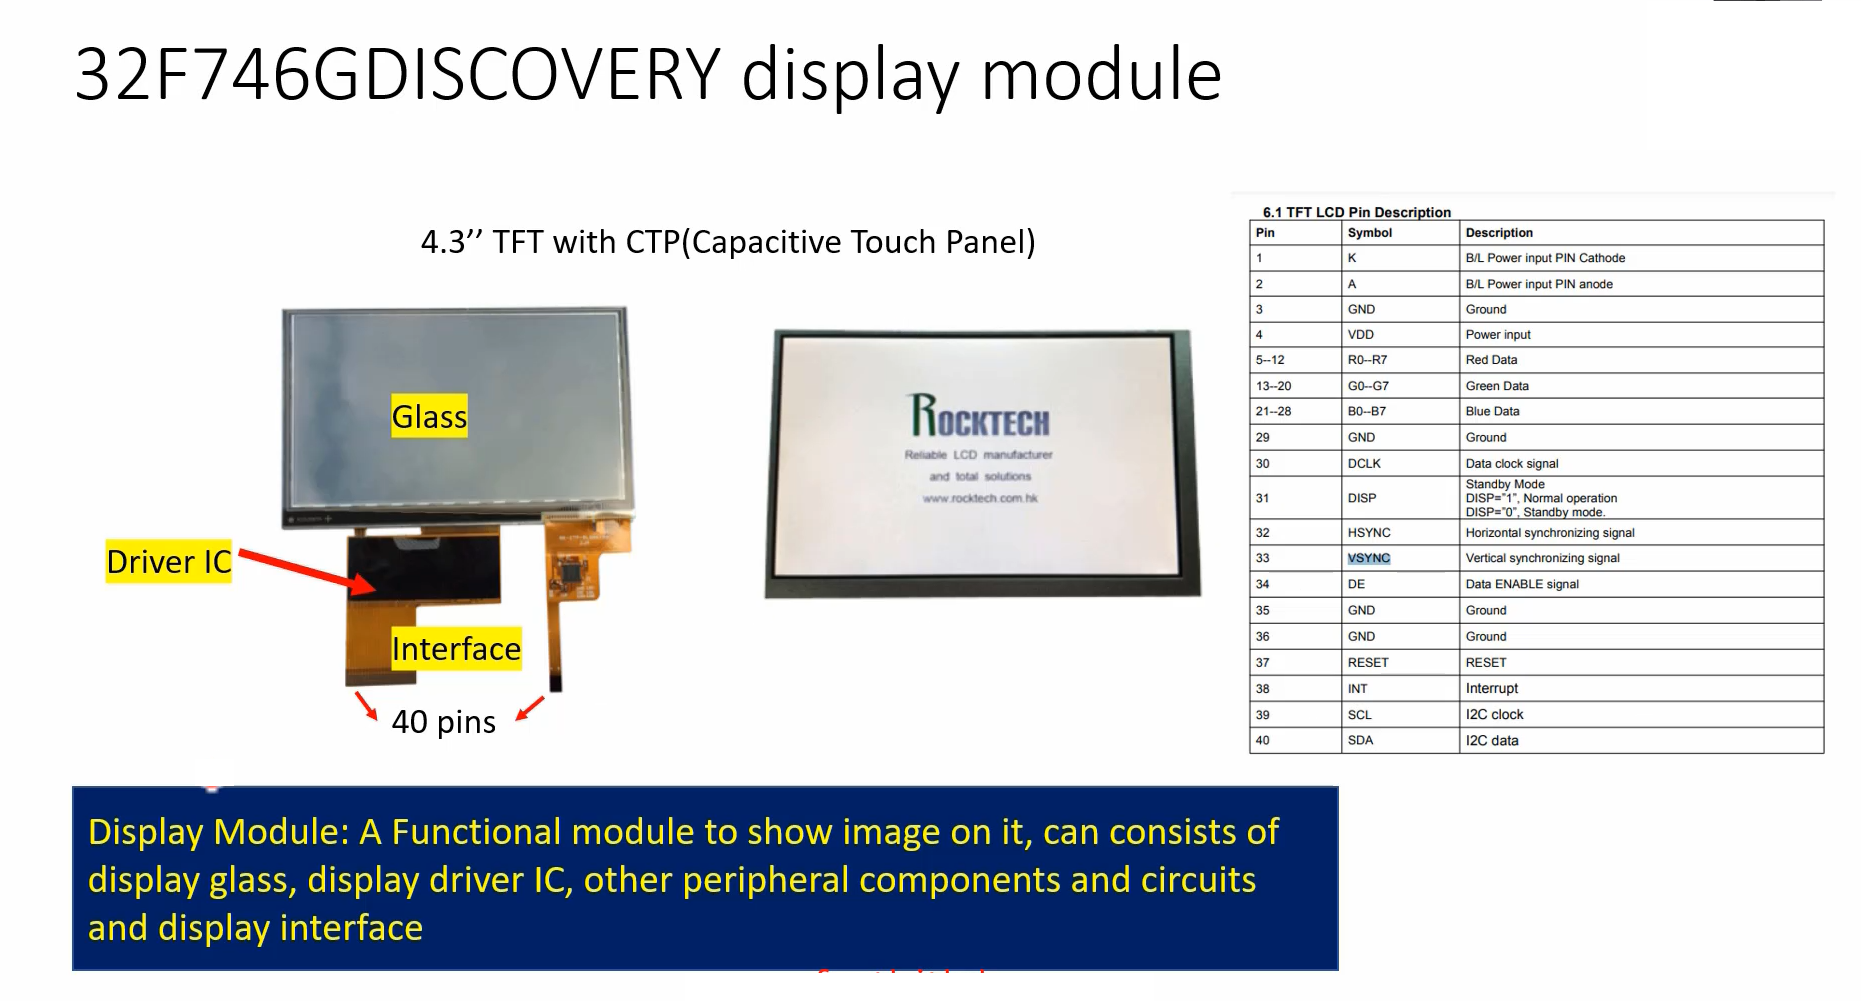 Figure 5. 32F746GDISCOVERY display module